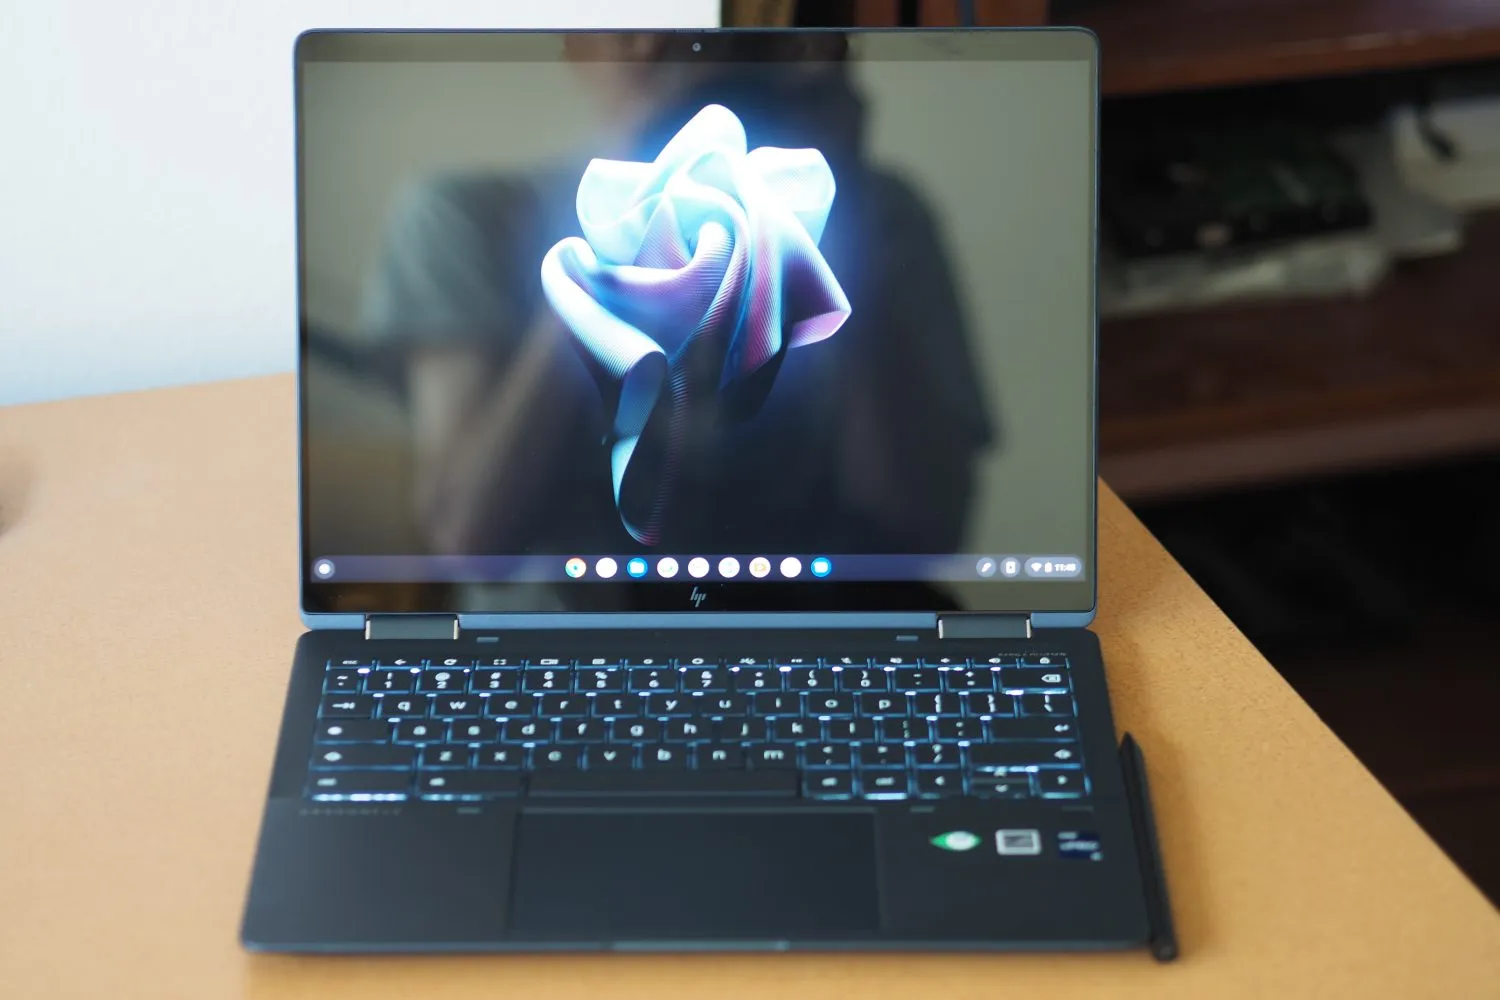 Anteprima frontale del HP Elite Dragonfly Chromebook mostrando display e tastiera.